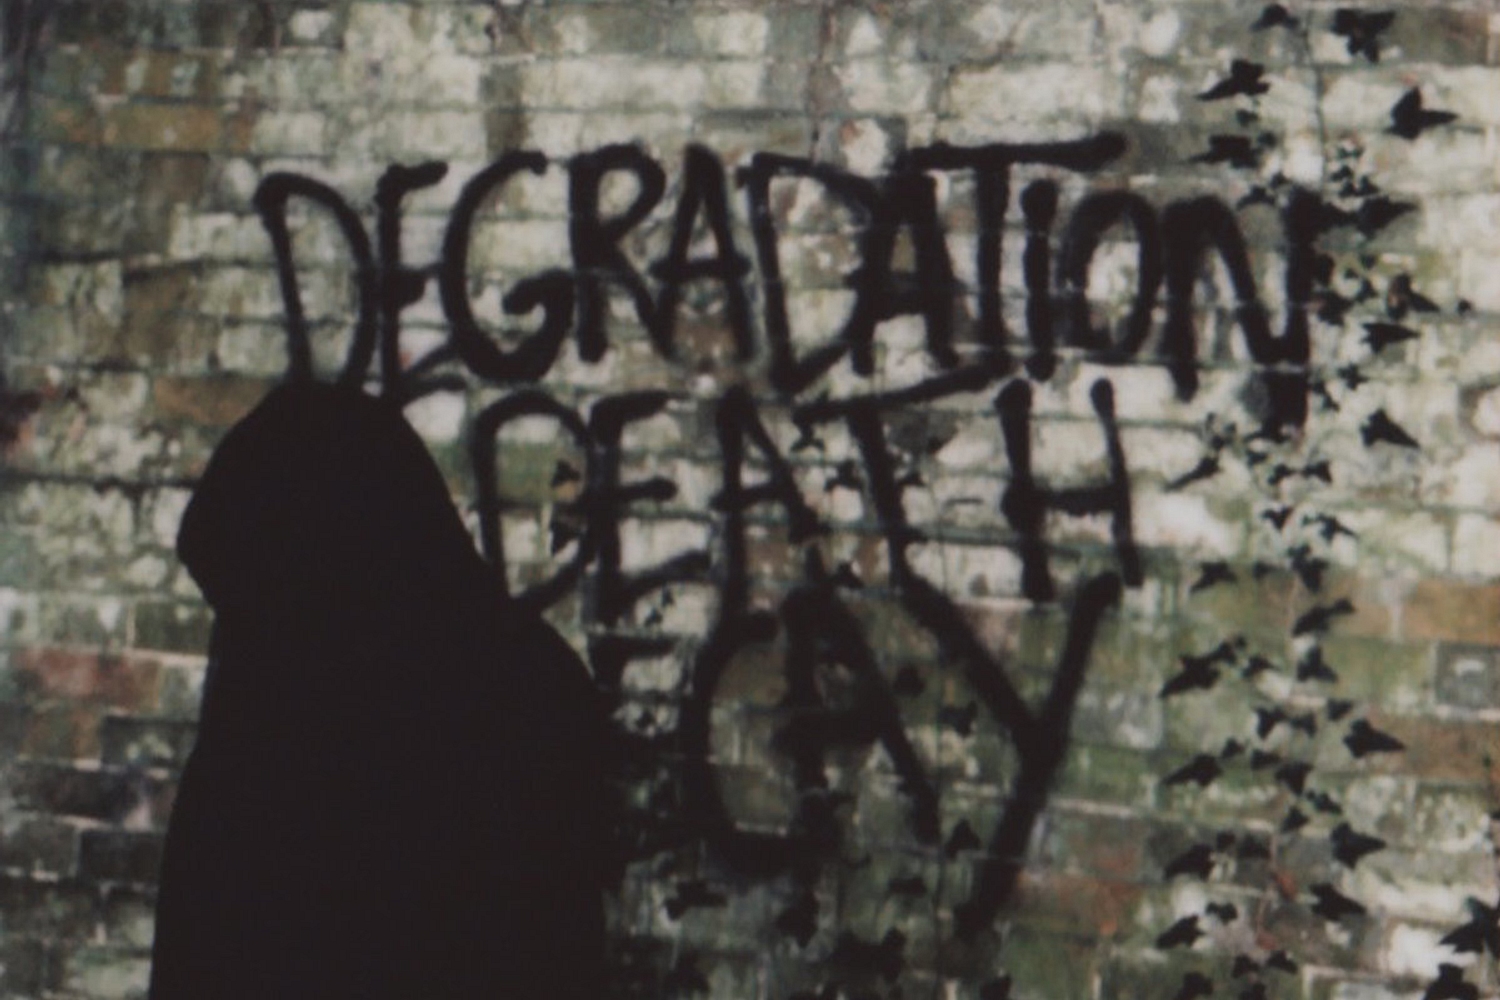 Ian Miles - Degradation, Death, Decay